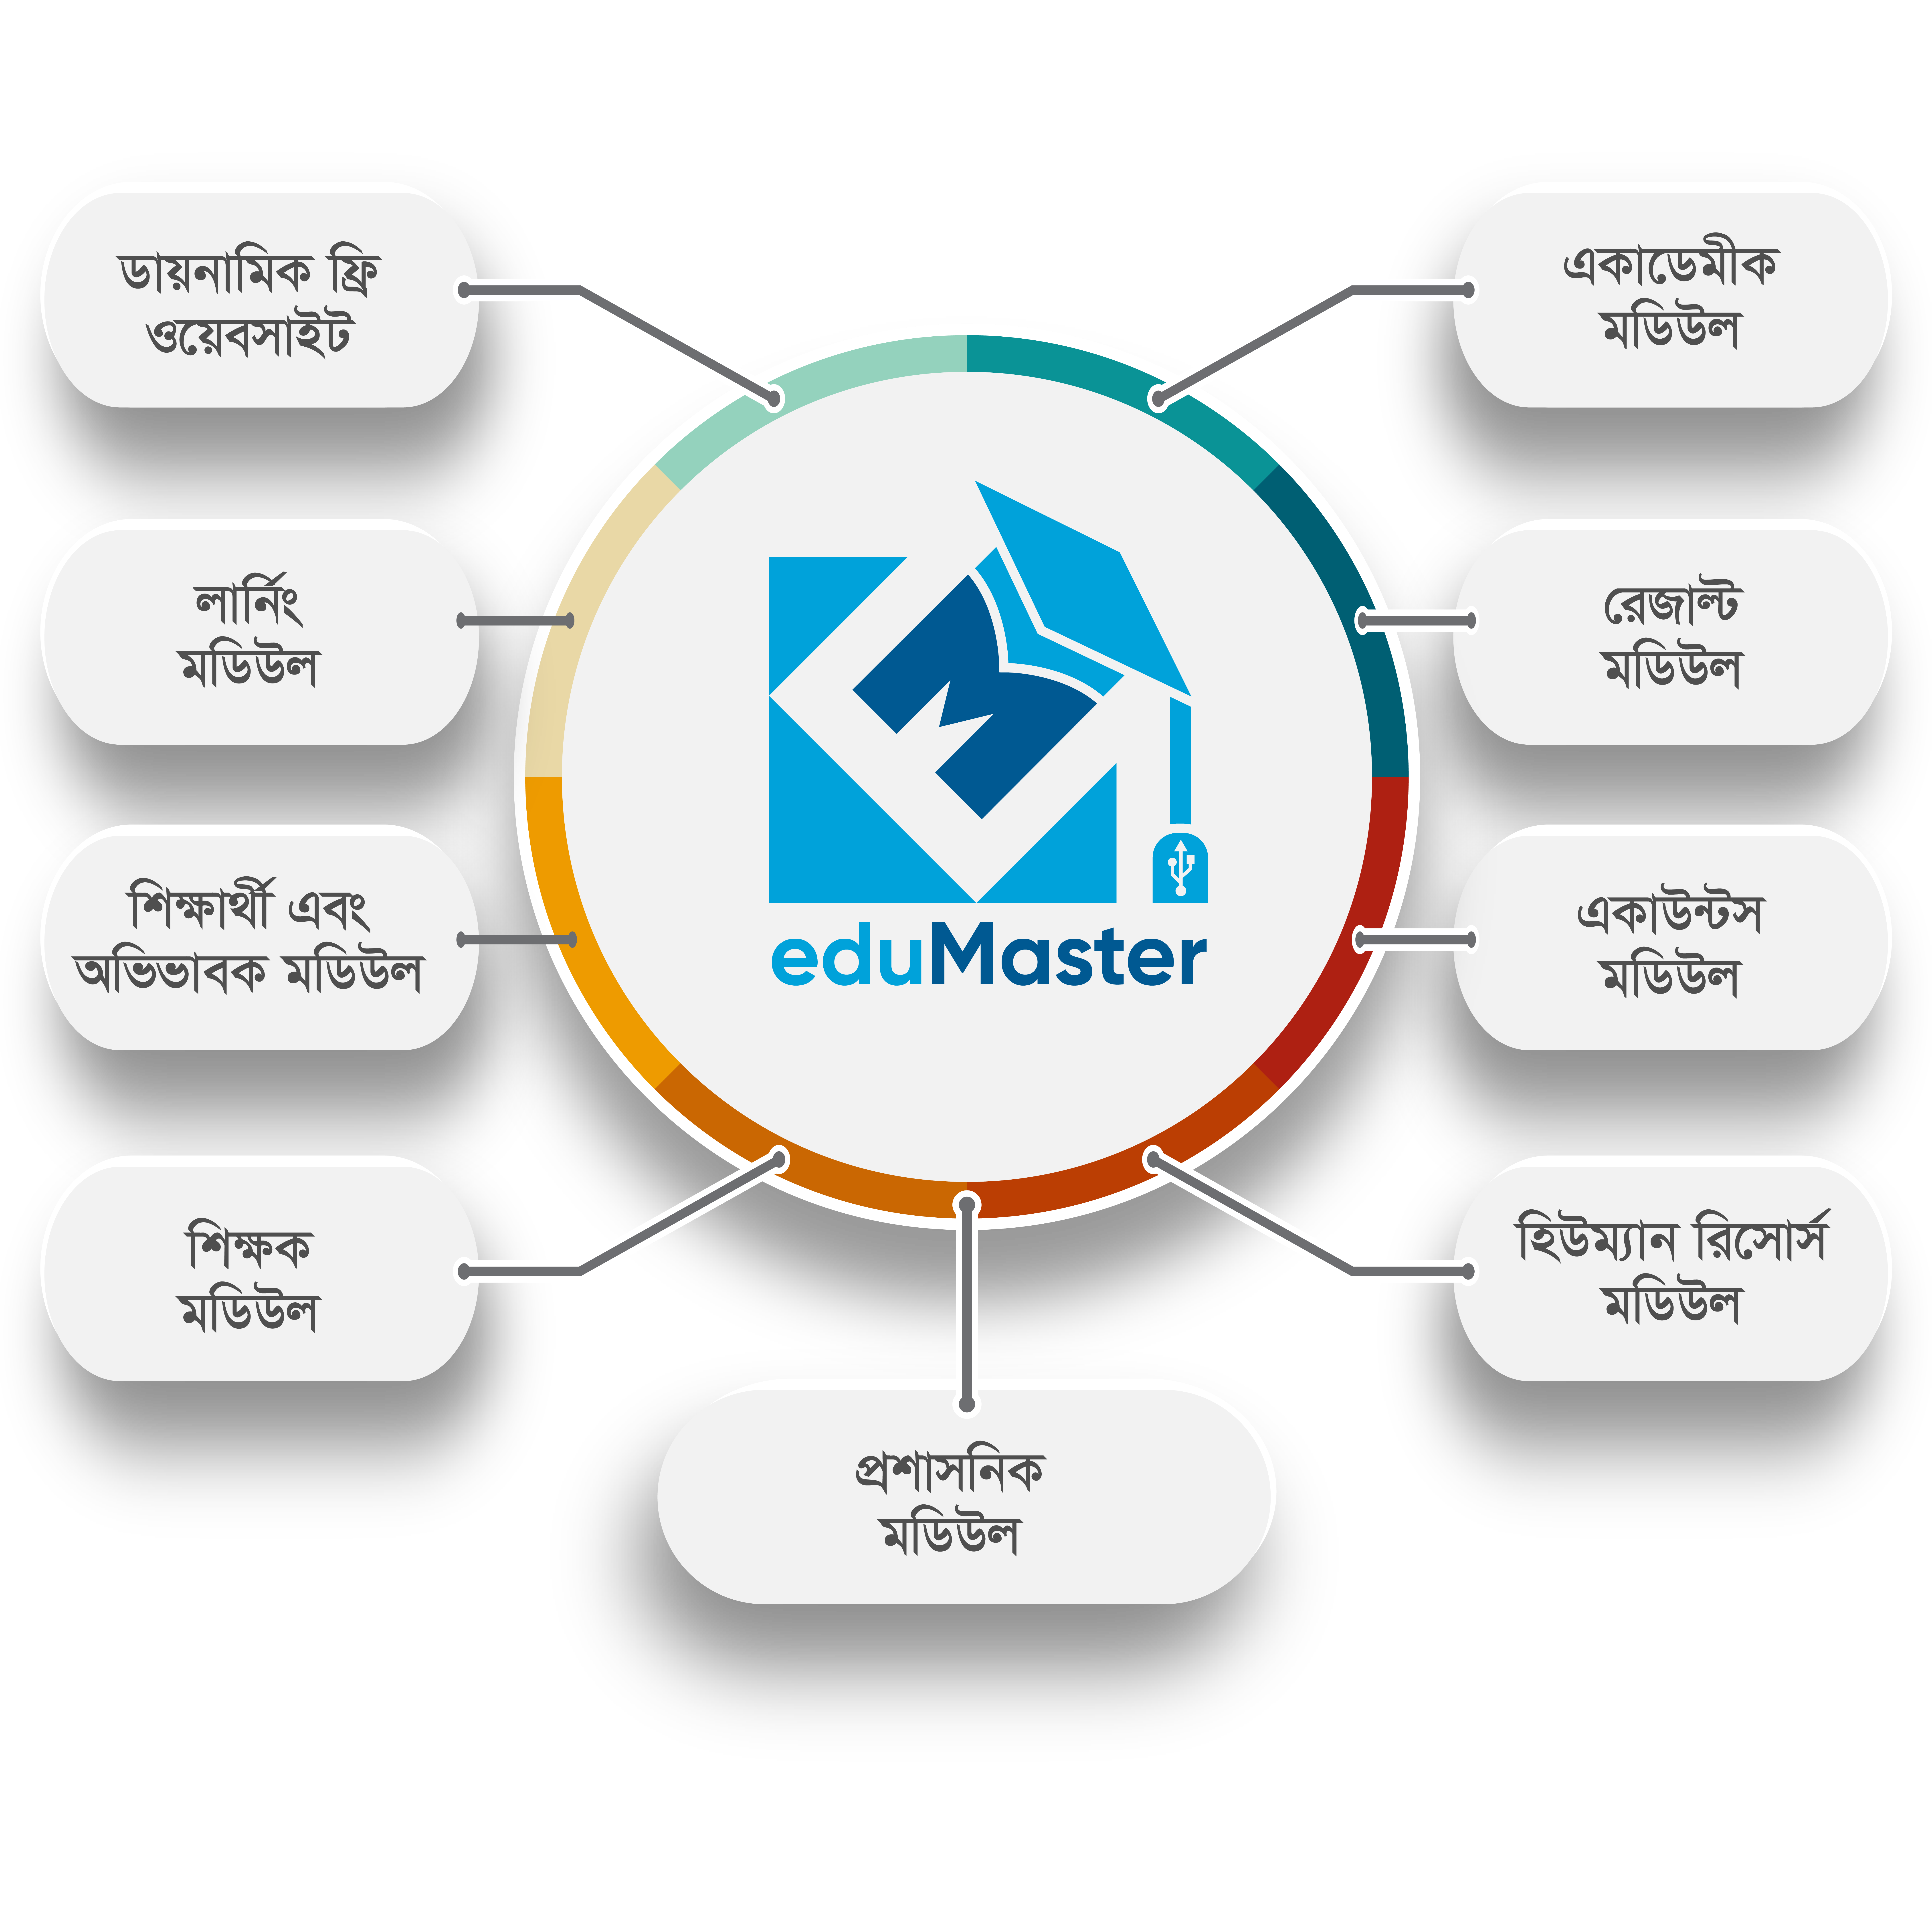 eduMaster